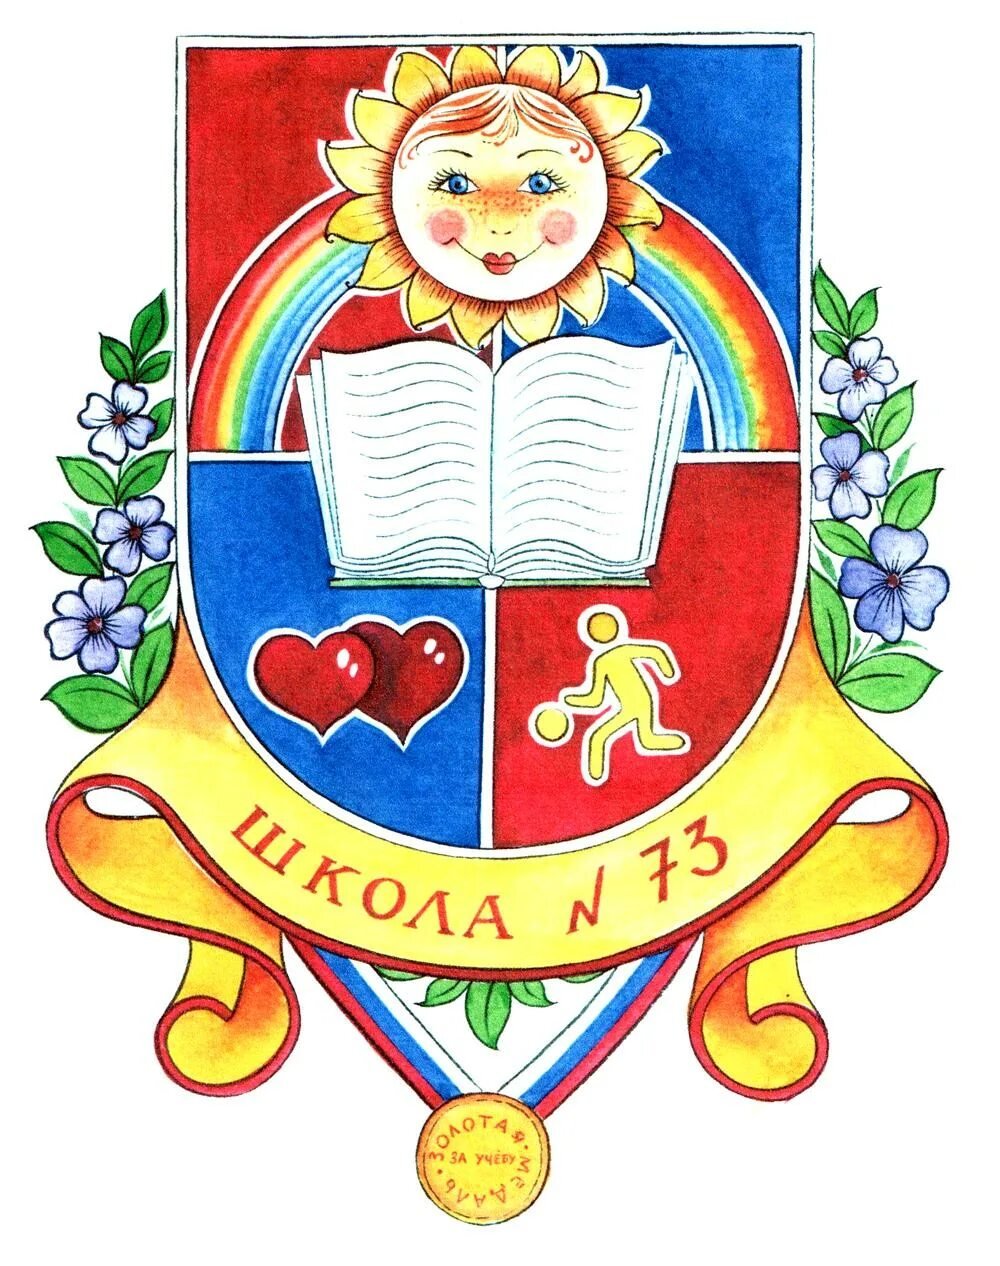 Фото герба класса. Герб школы. Герб класса. Школьная эмблема. Герб класса и школы.